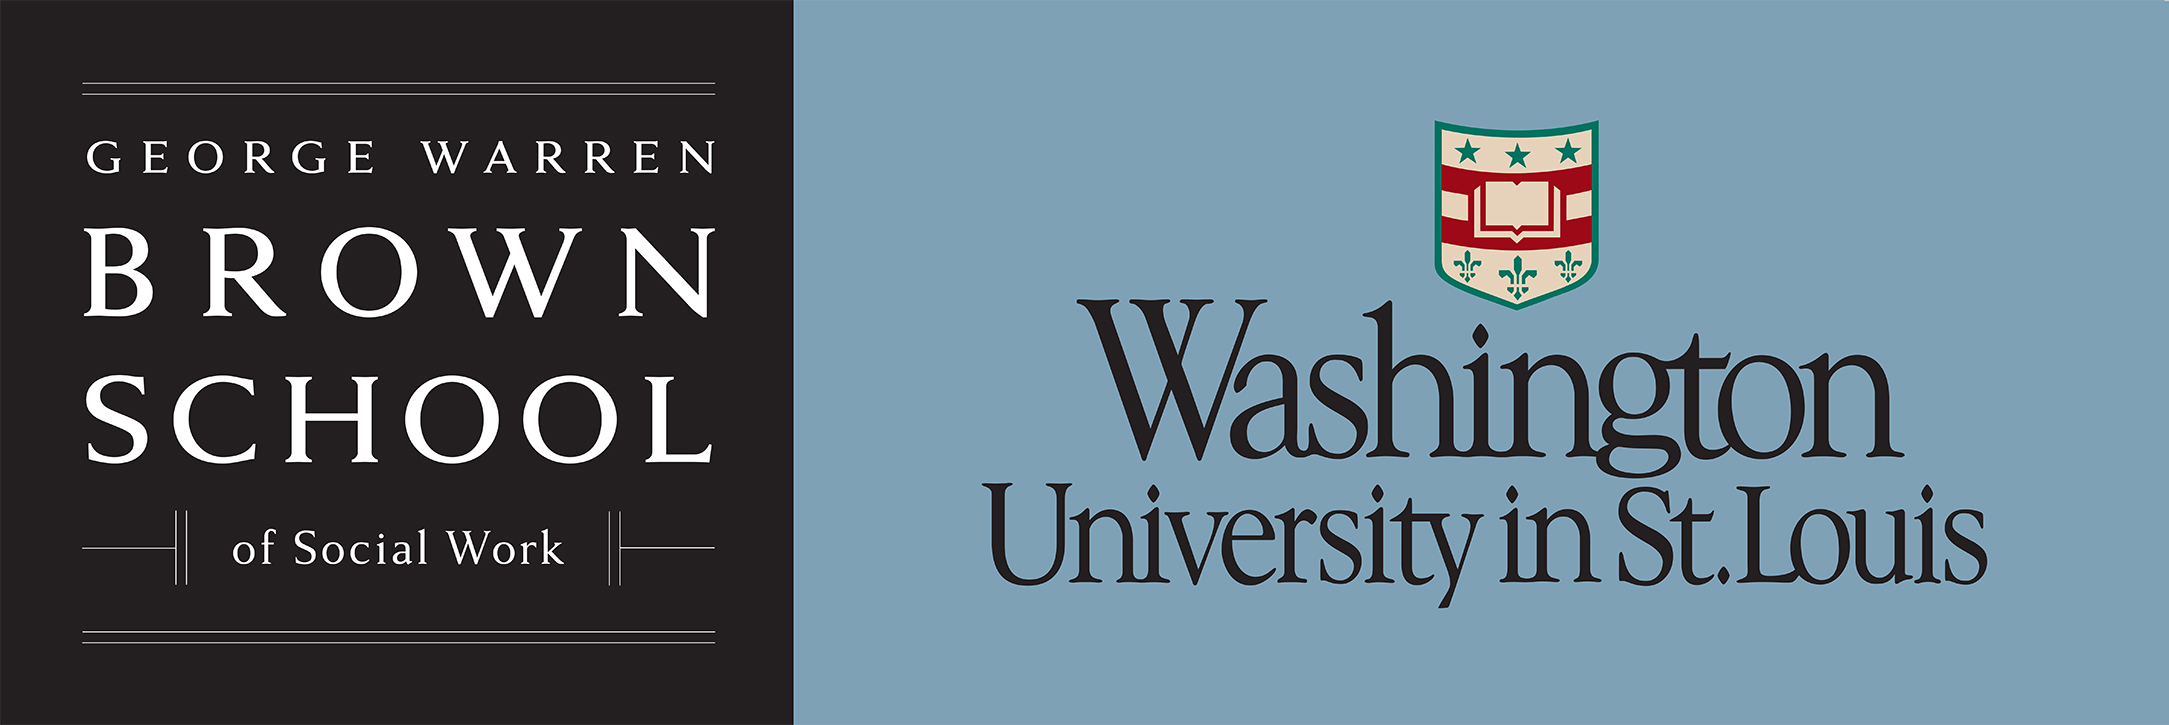 Washington University in St. Louis - Council on Education for Public Health